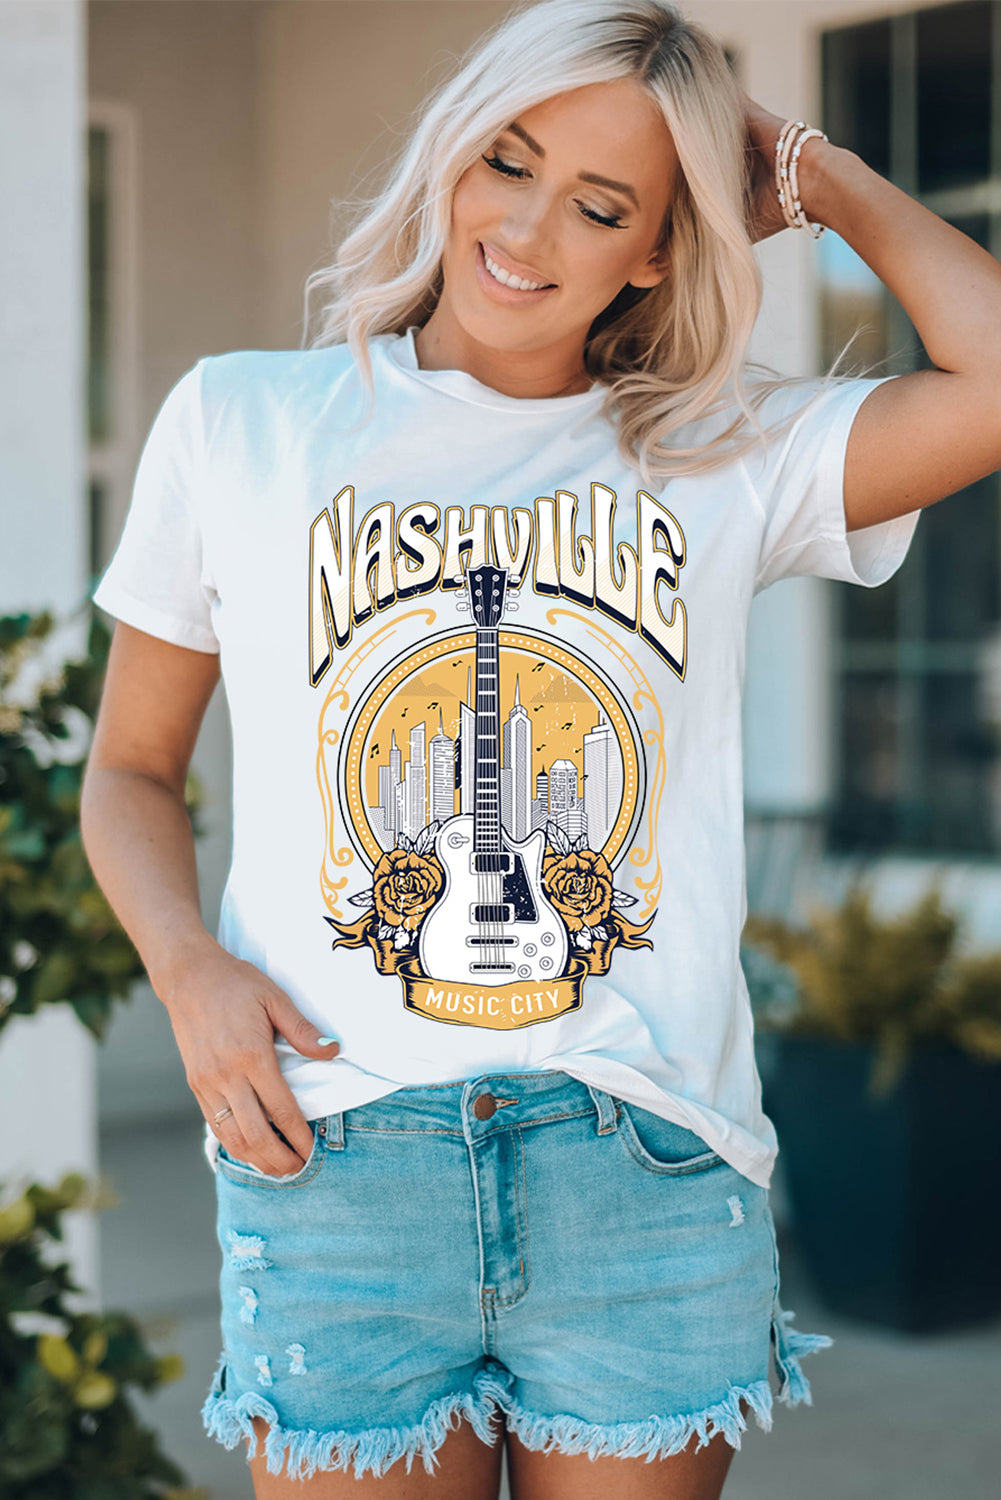 NASHVILLE MUSIC CITY Round Neck Tee Shirt